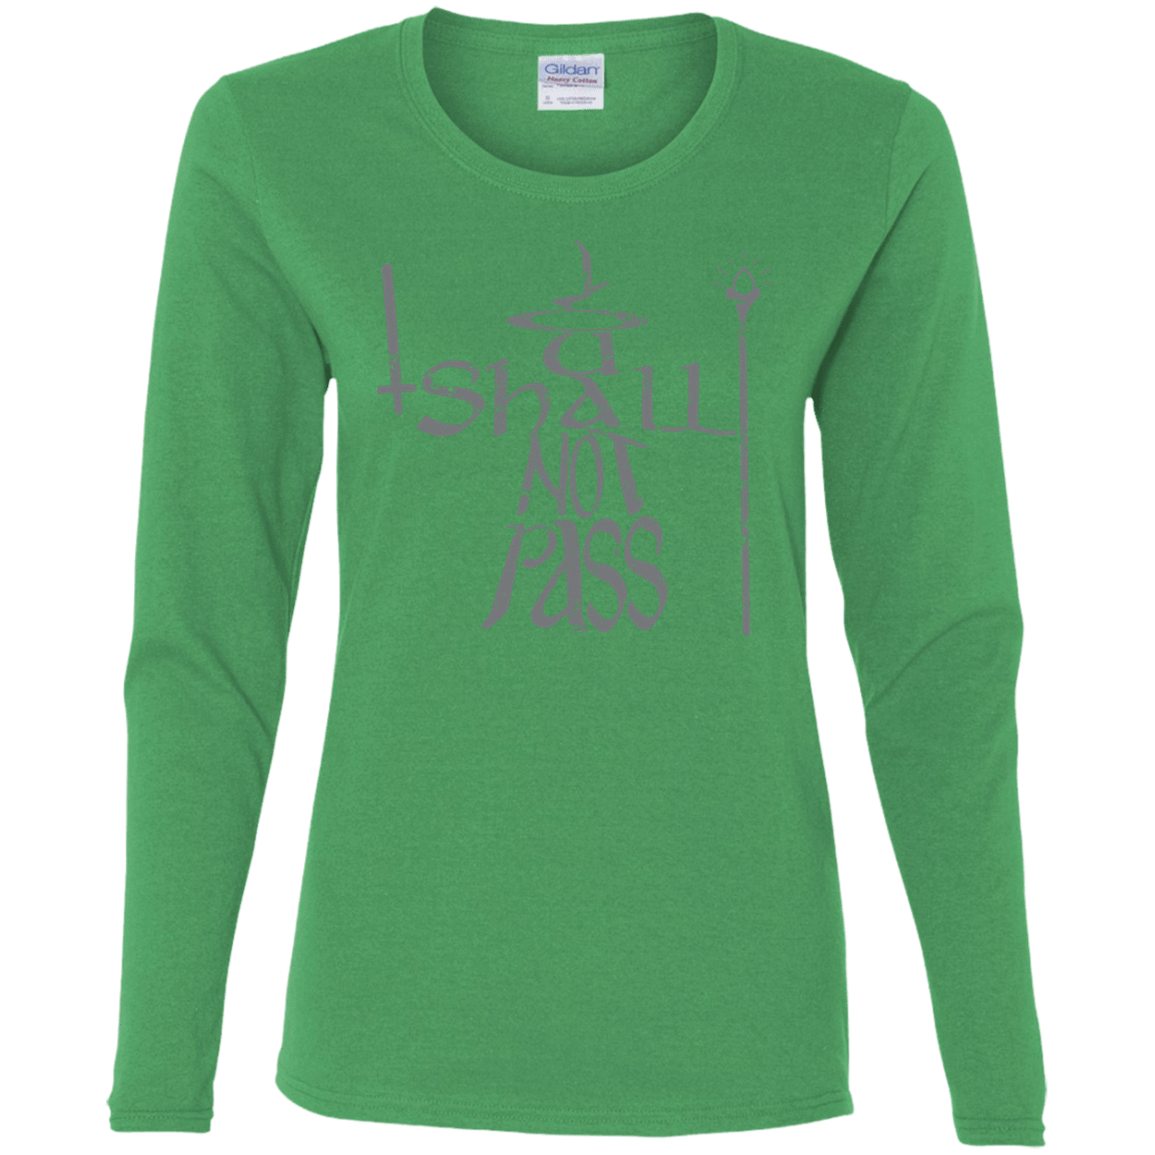 T-Shirts Irish Green / S You Shall Not Pass Women's Long Sleeve T-Shirt